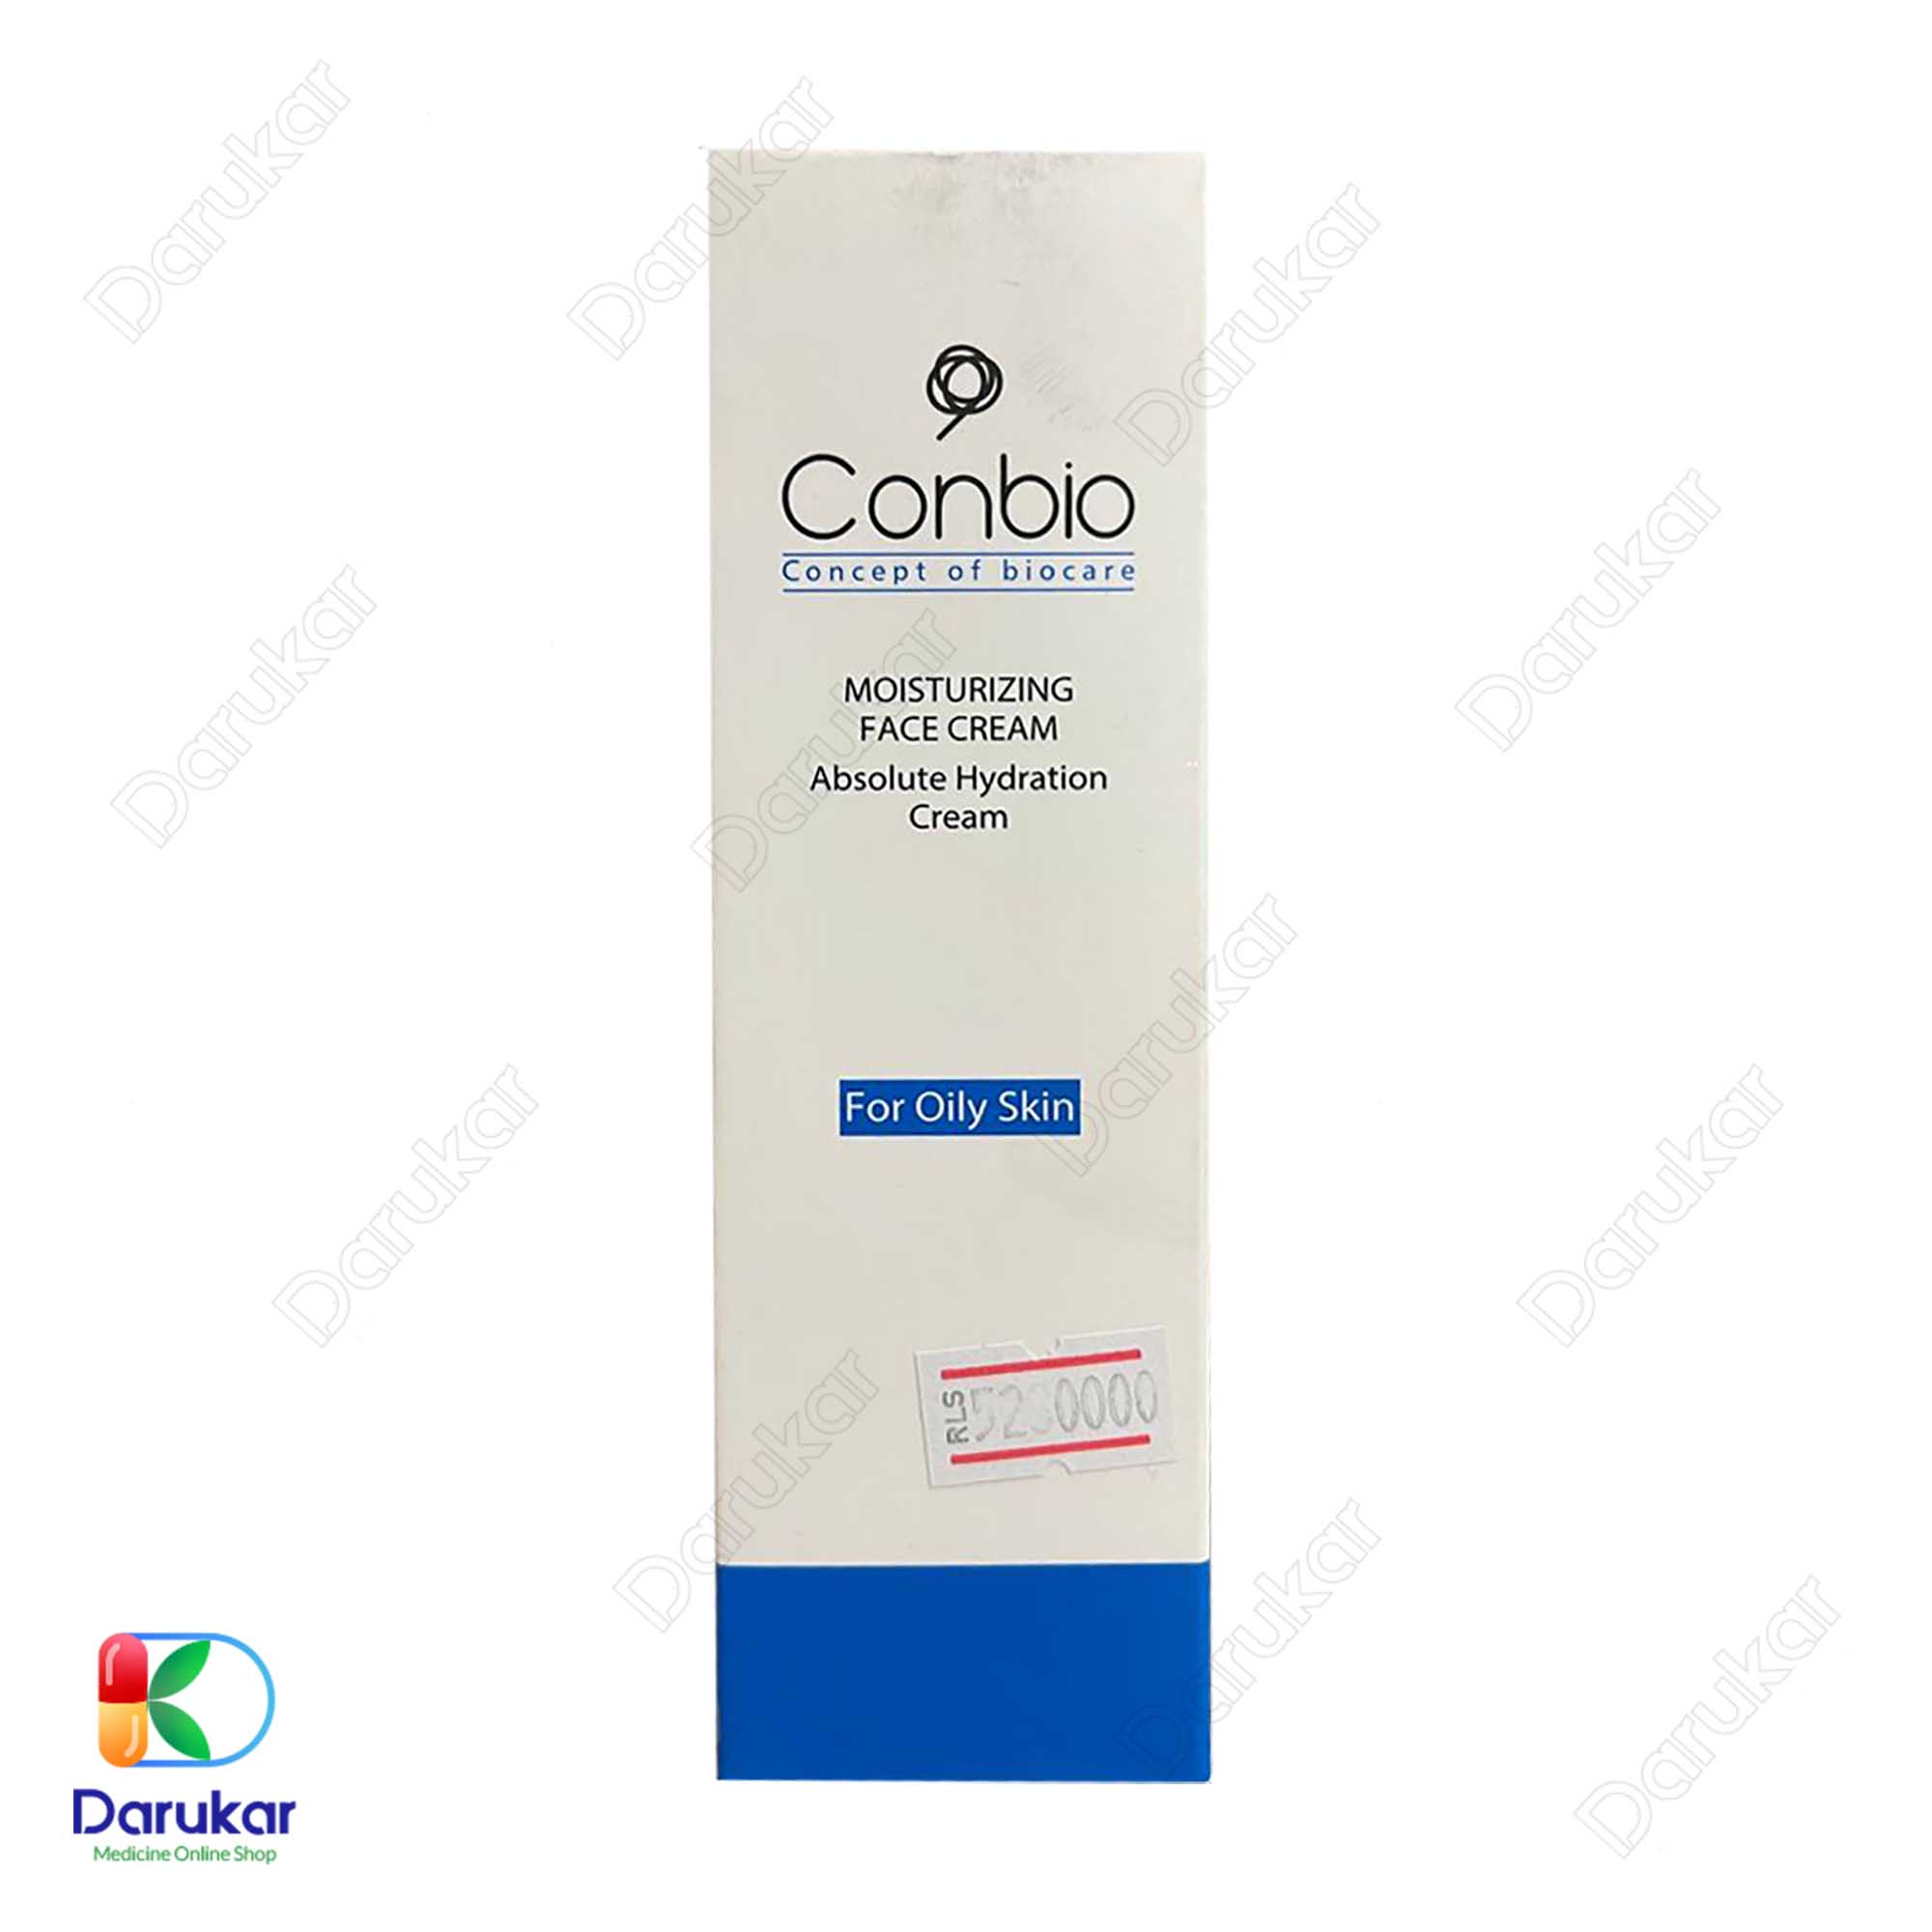 Conbio moisturizing face cream for oily skin 50 ml 2